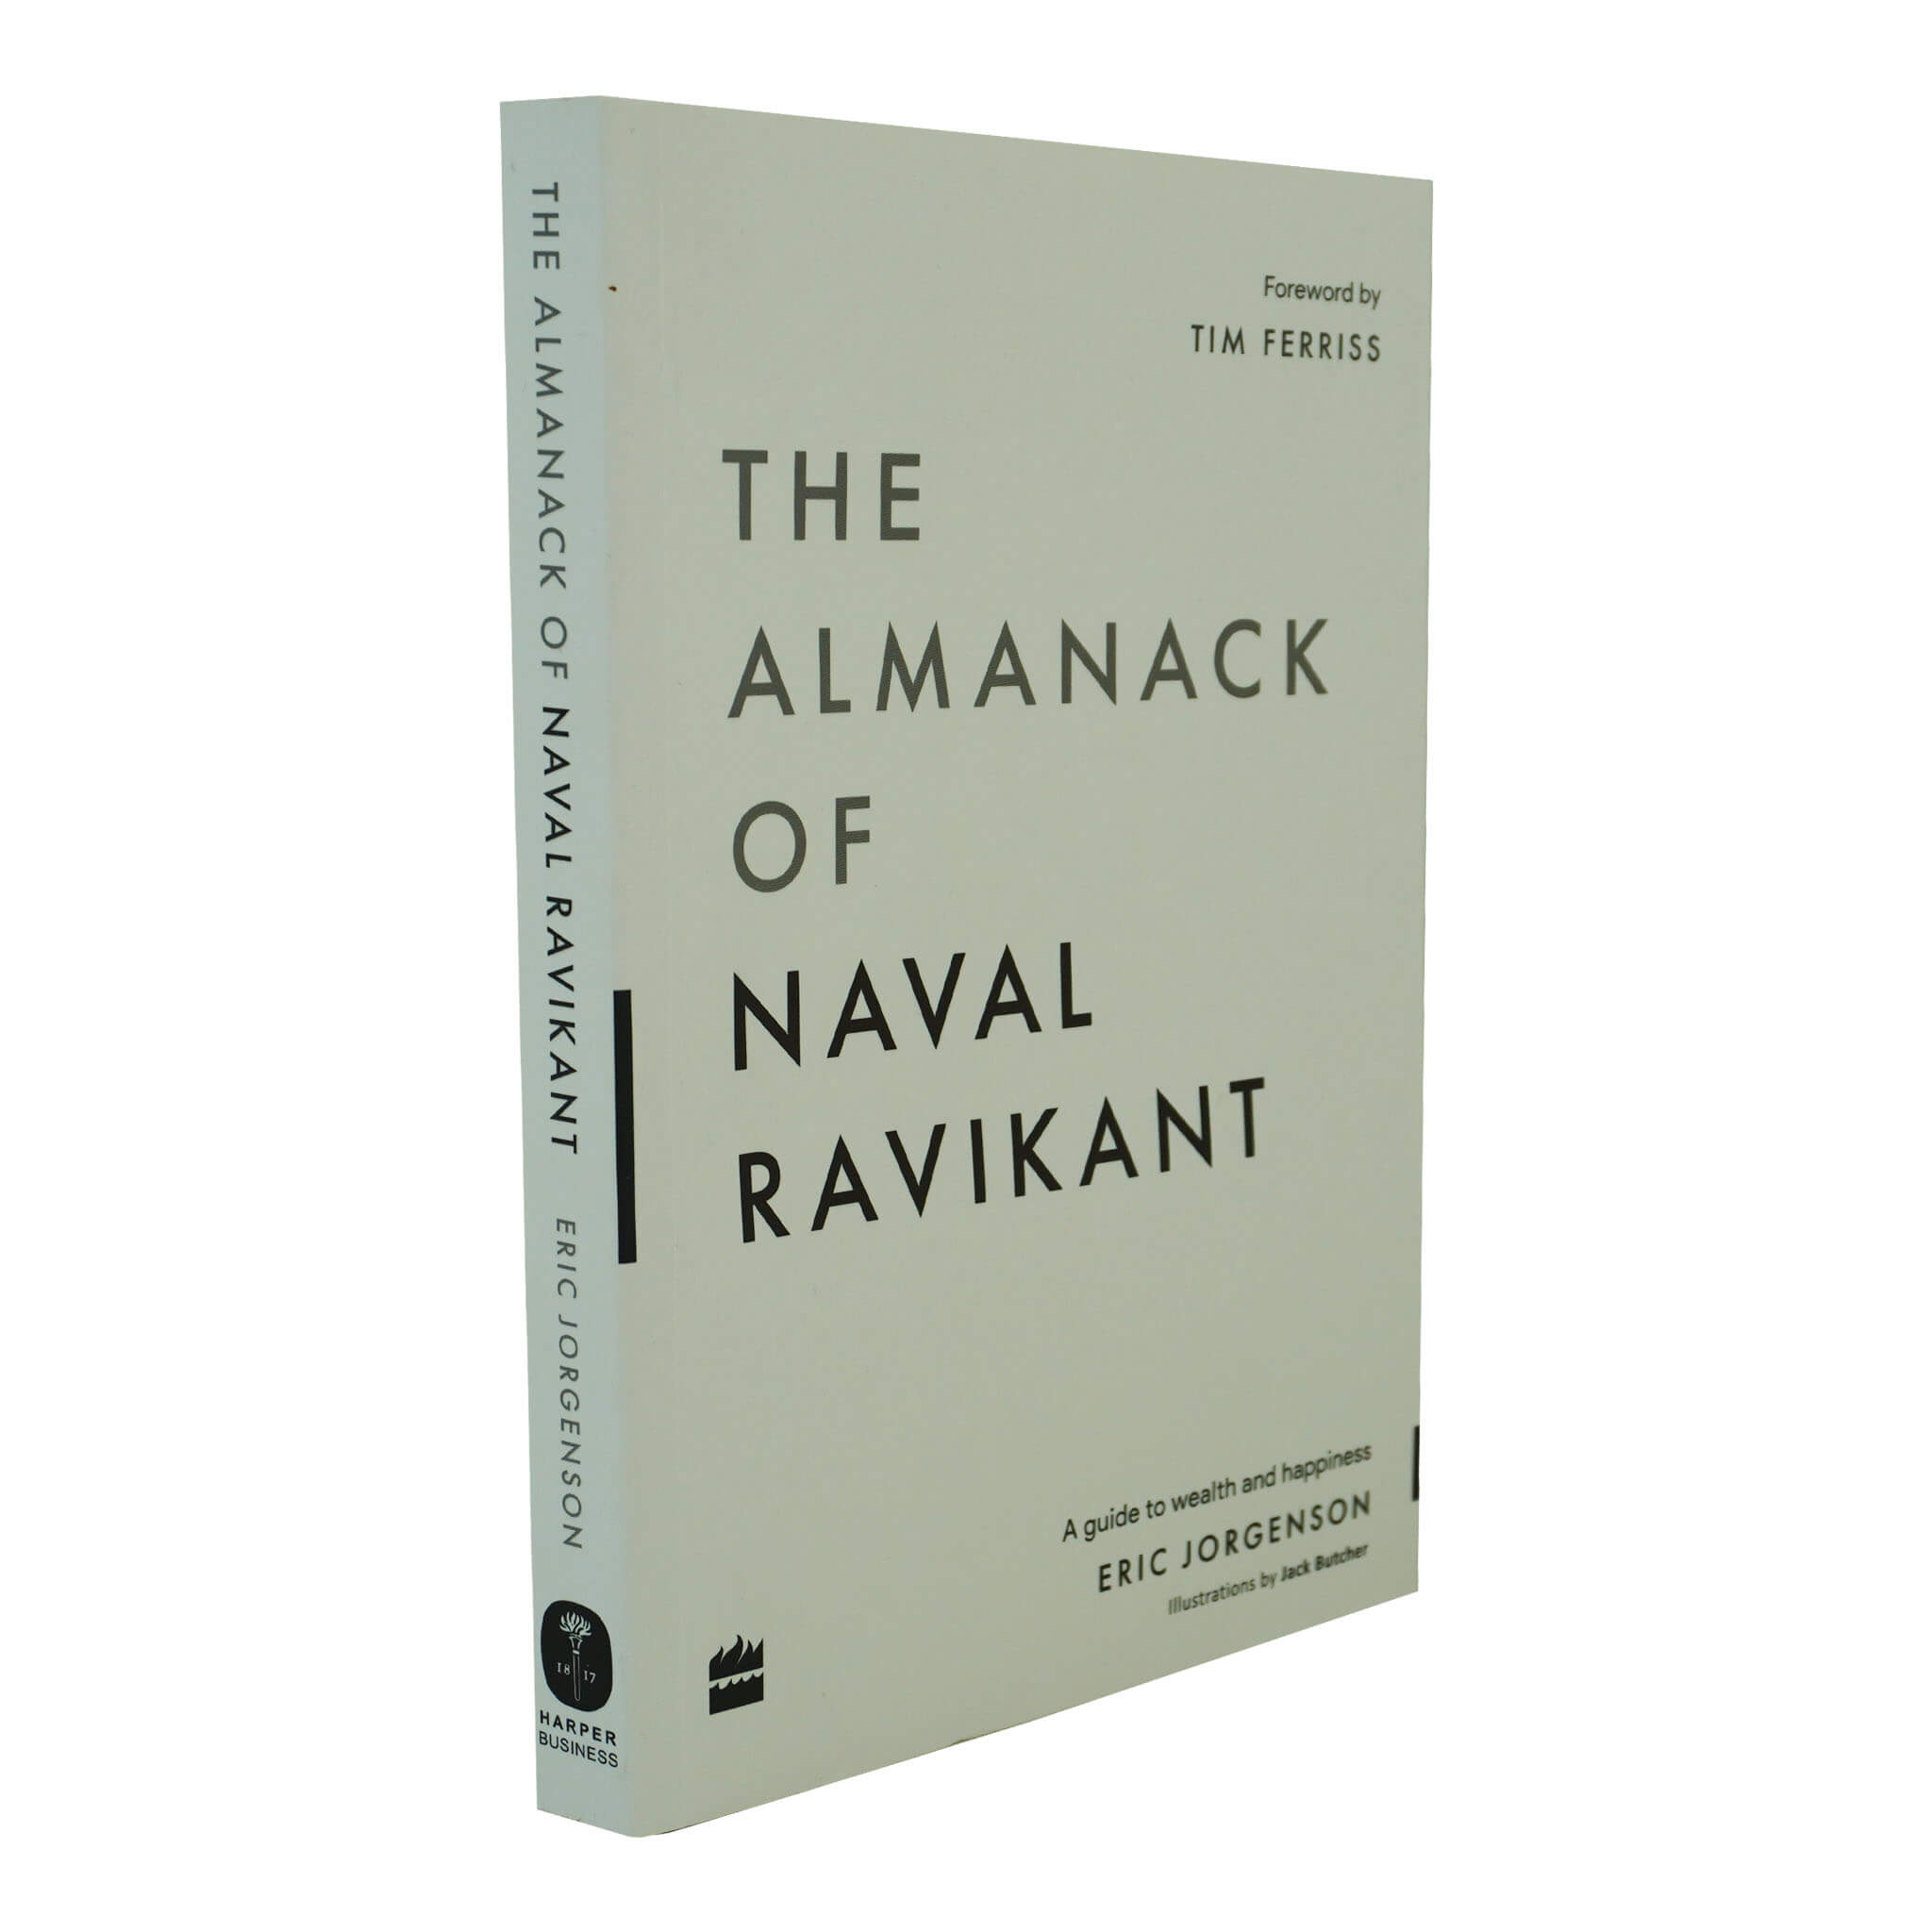 THE ALMANACK OF NAVAL RAVIKANT (PAPERBACK) - ERIC JORGENSON